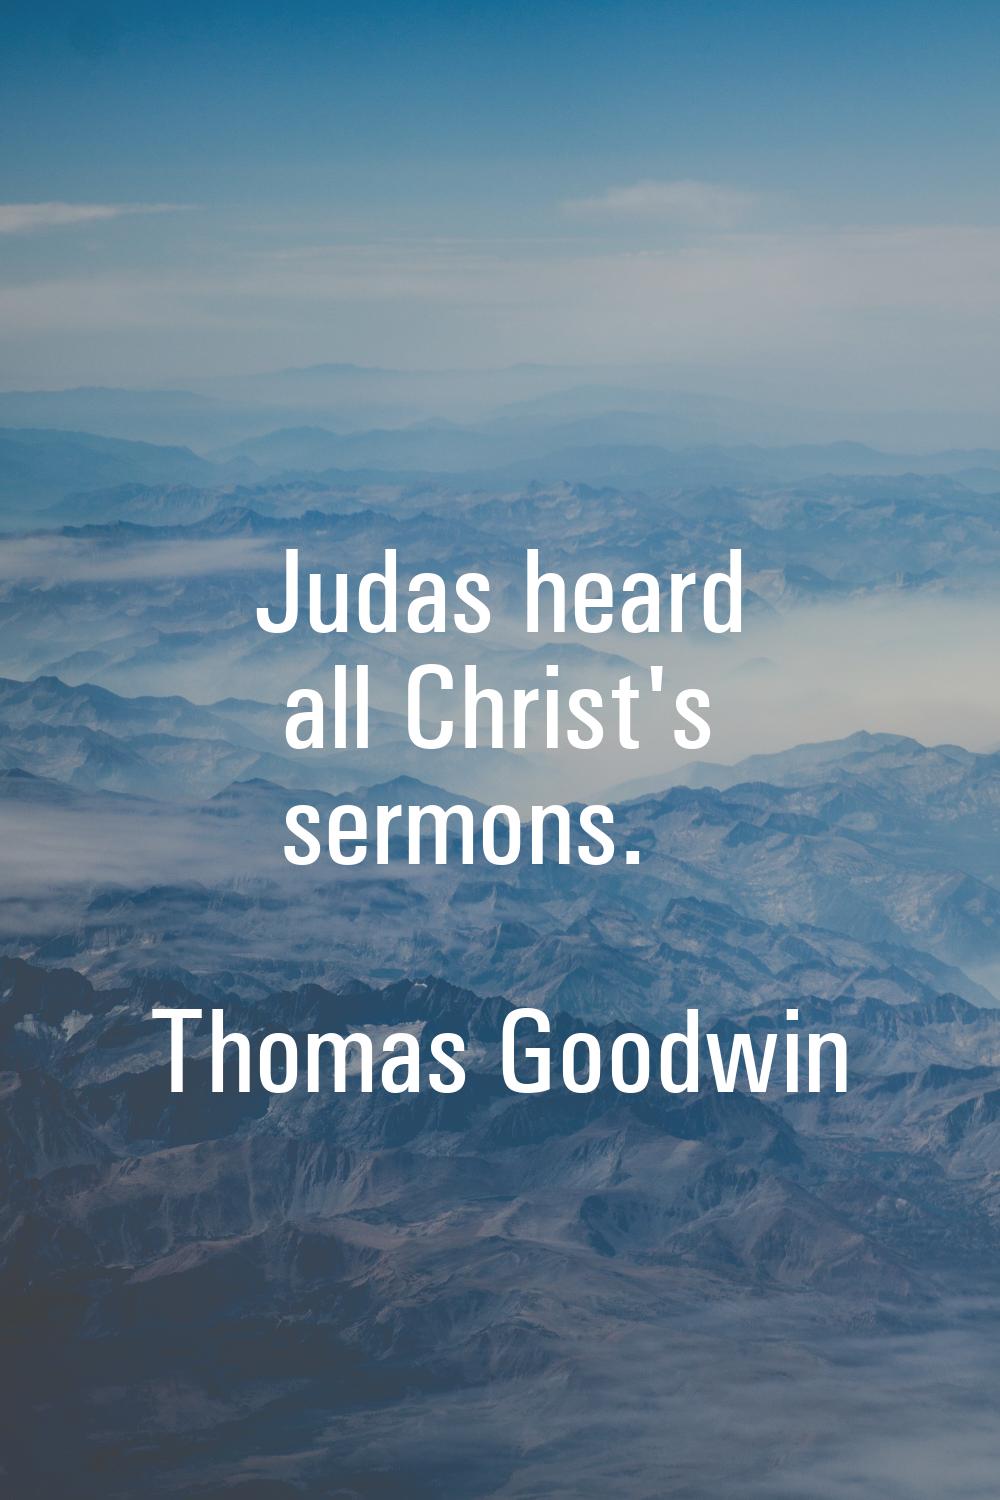 Judas heard all Christ's sermons.